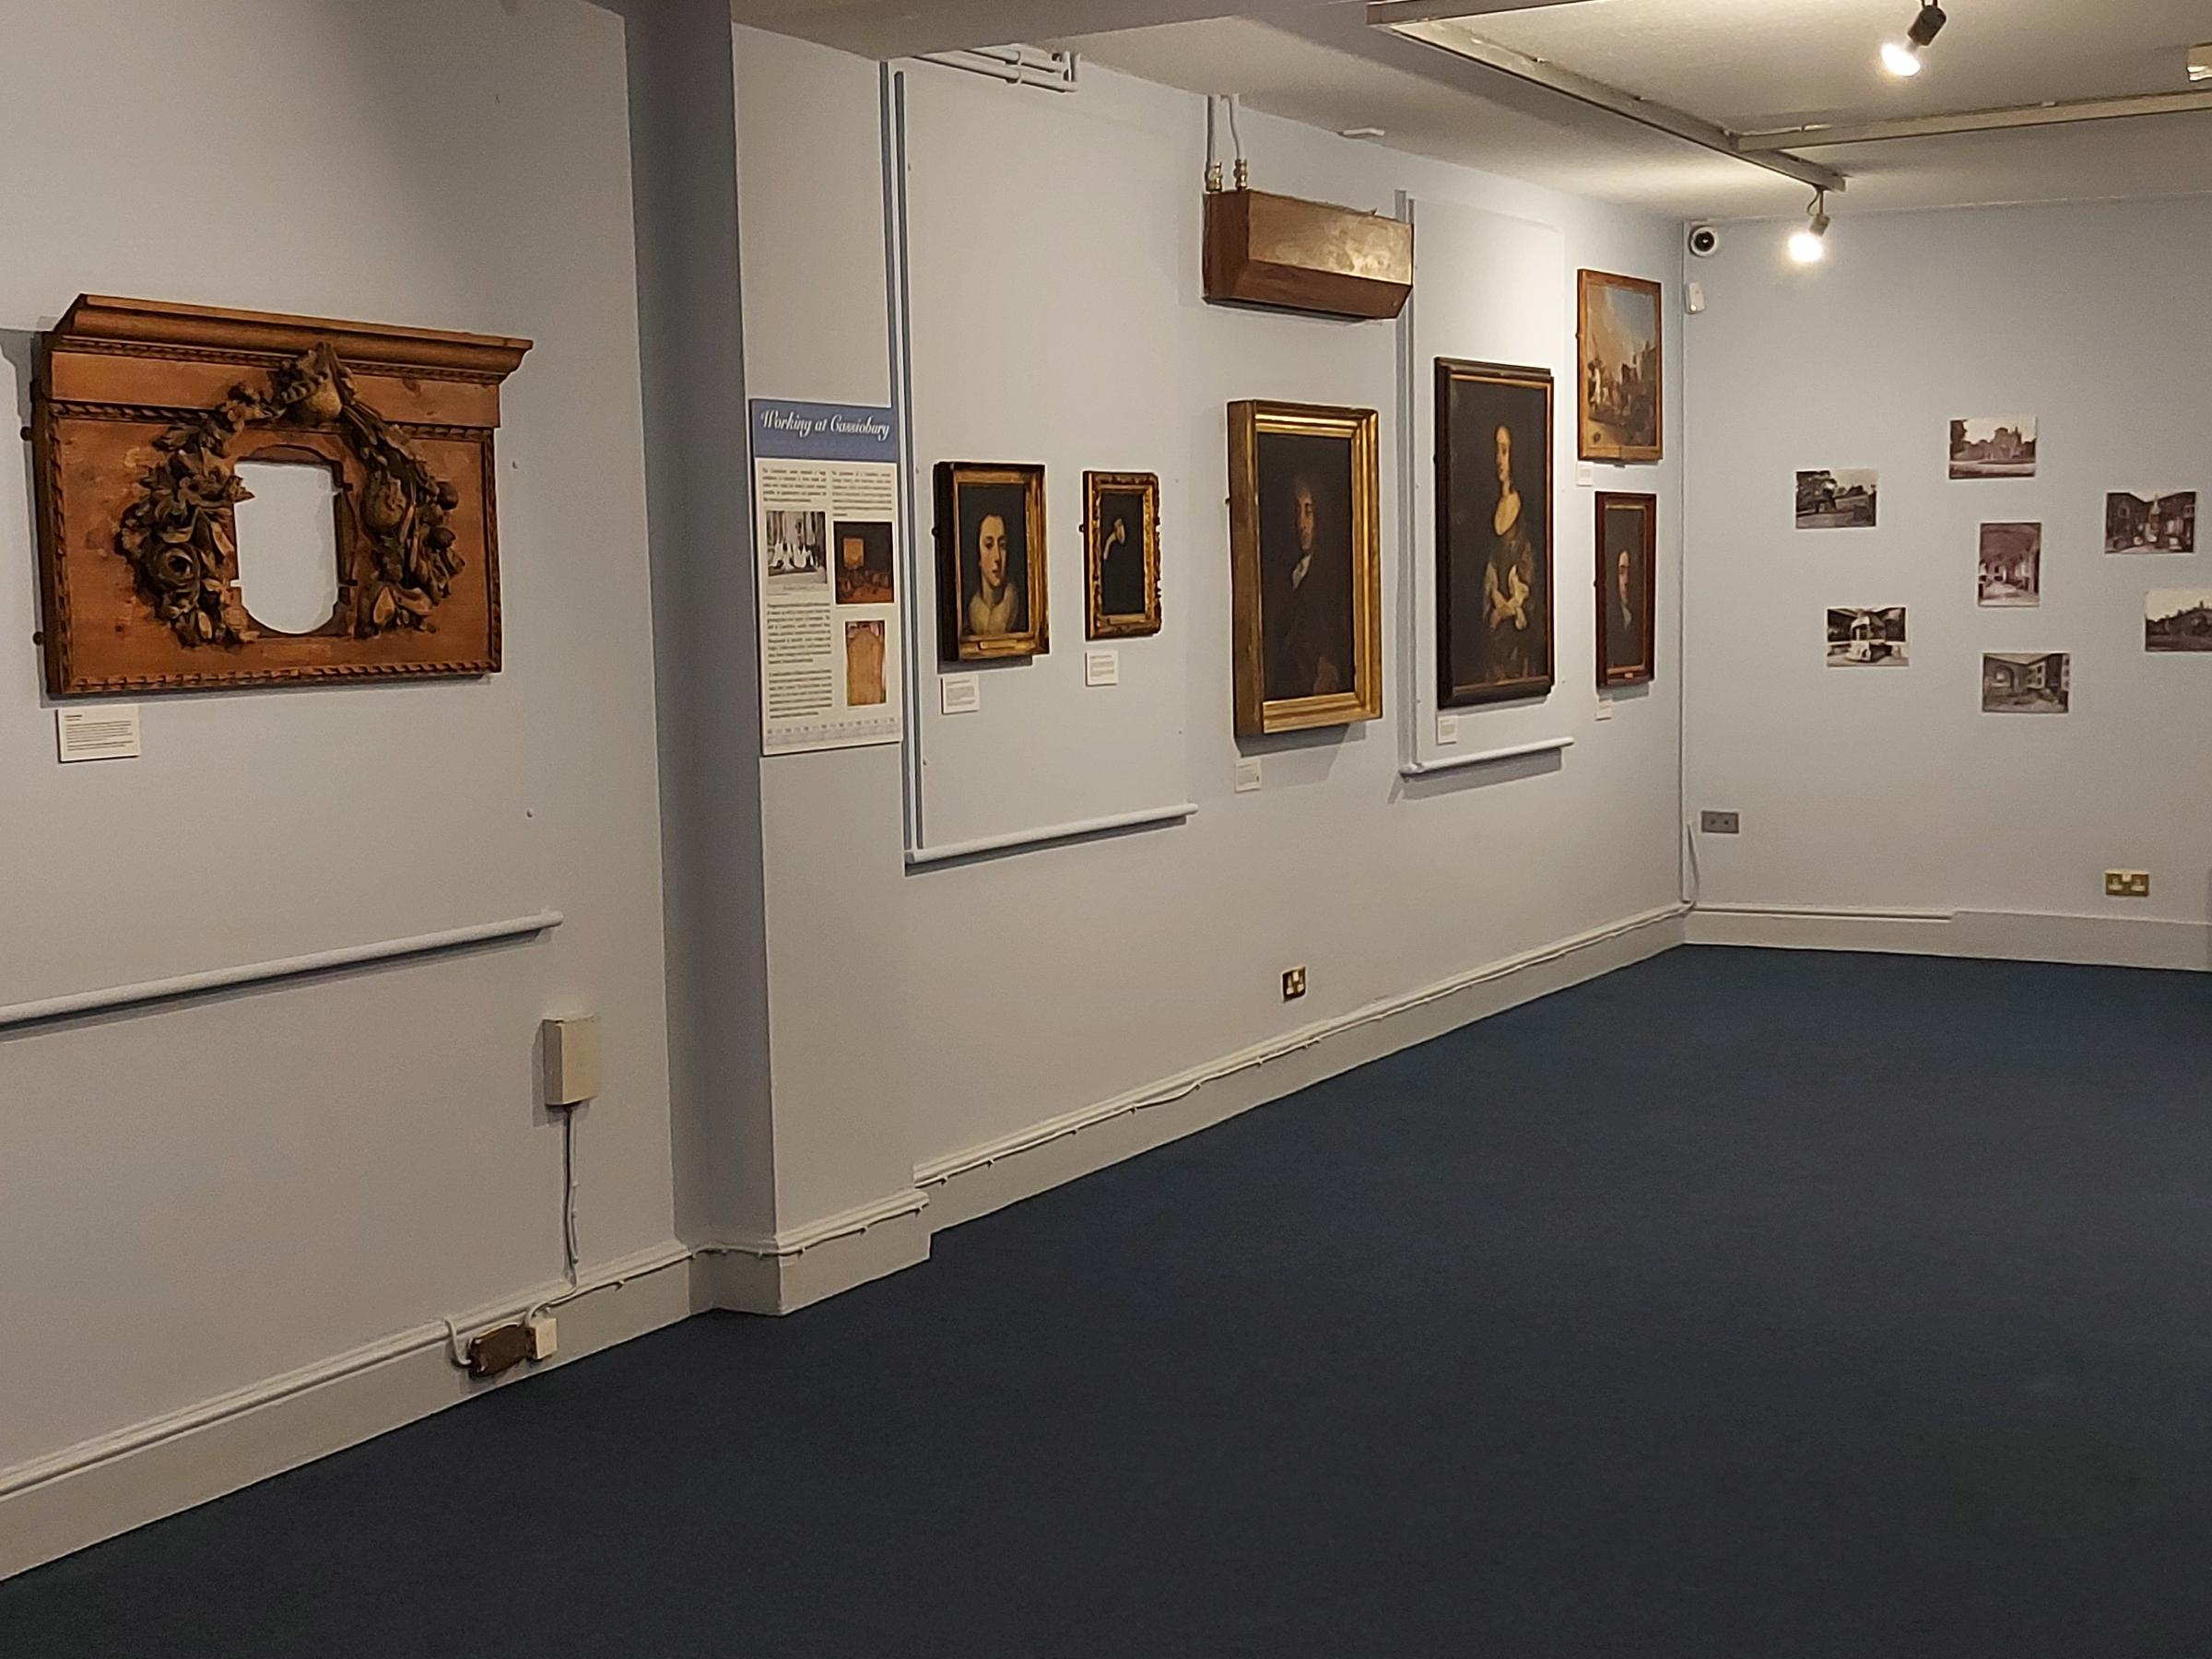 The refurbished Cassiobury gallery